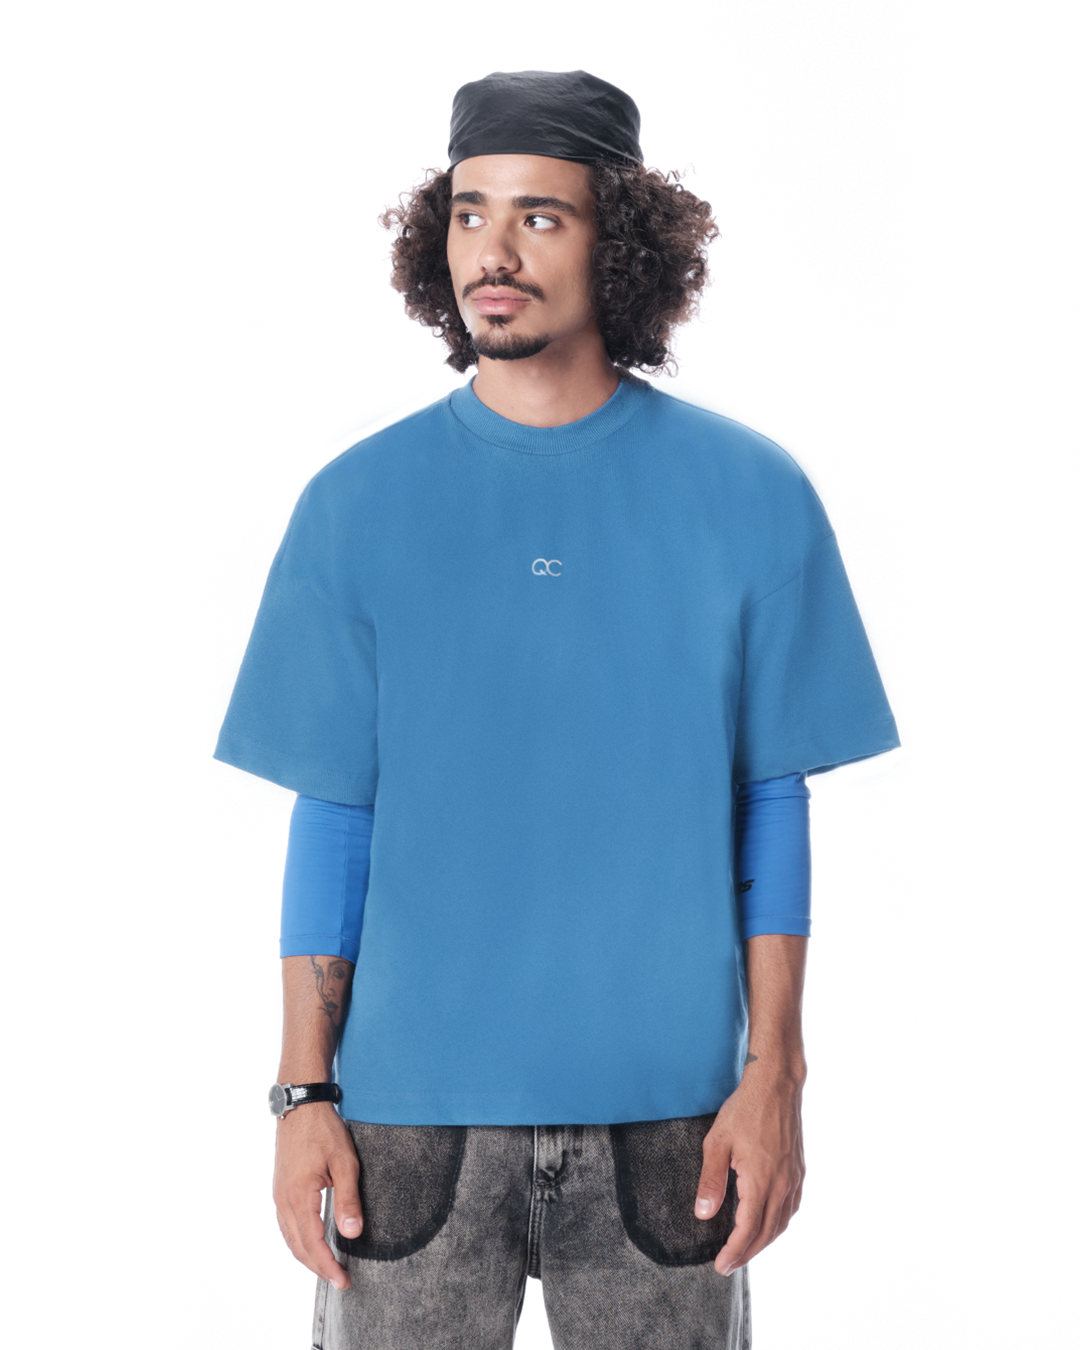 Ficino Blue T-Shirt